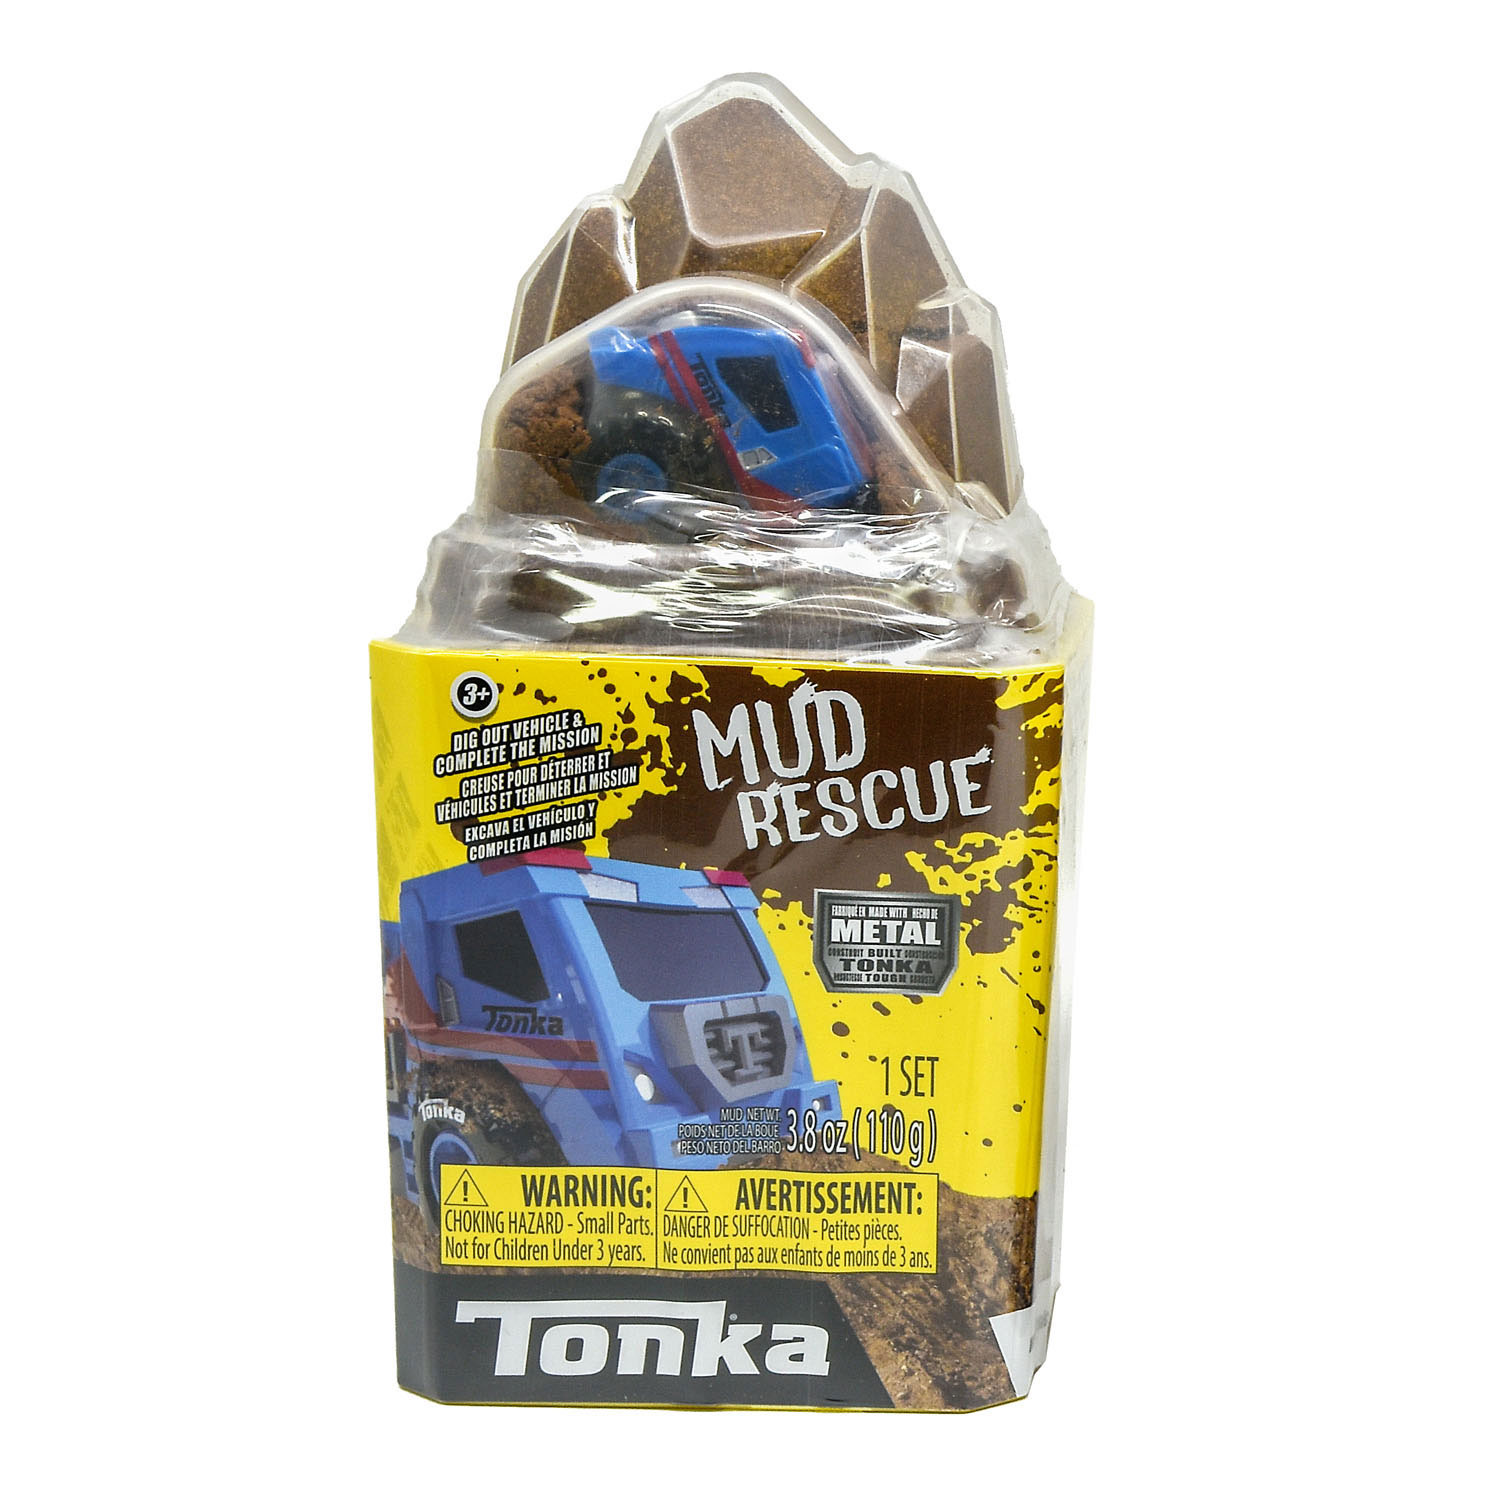 Tonka Metal Movers Mud Rescue